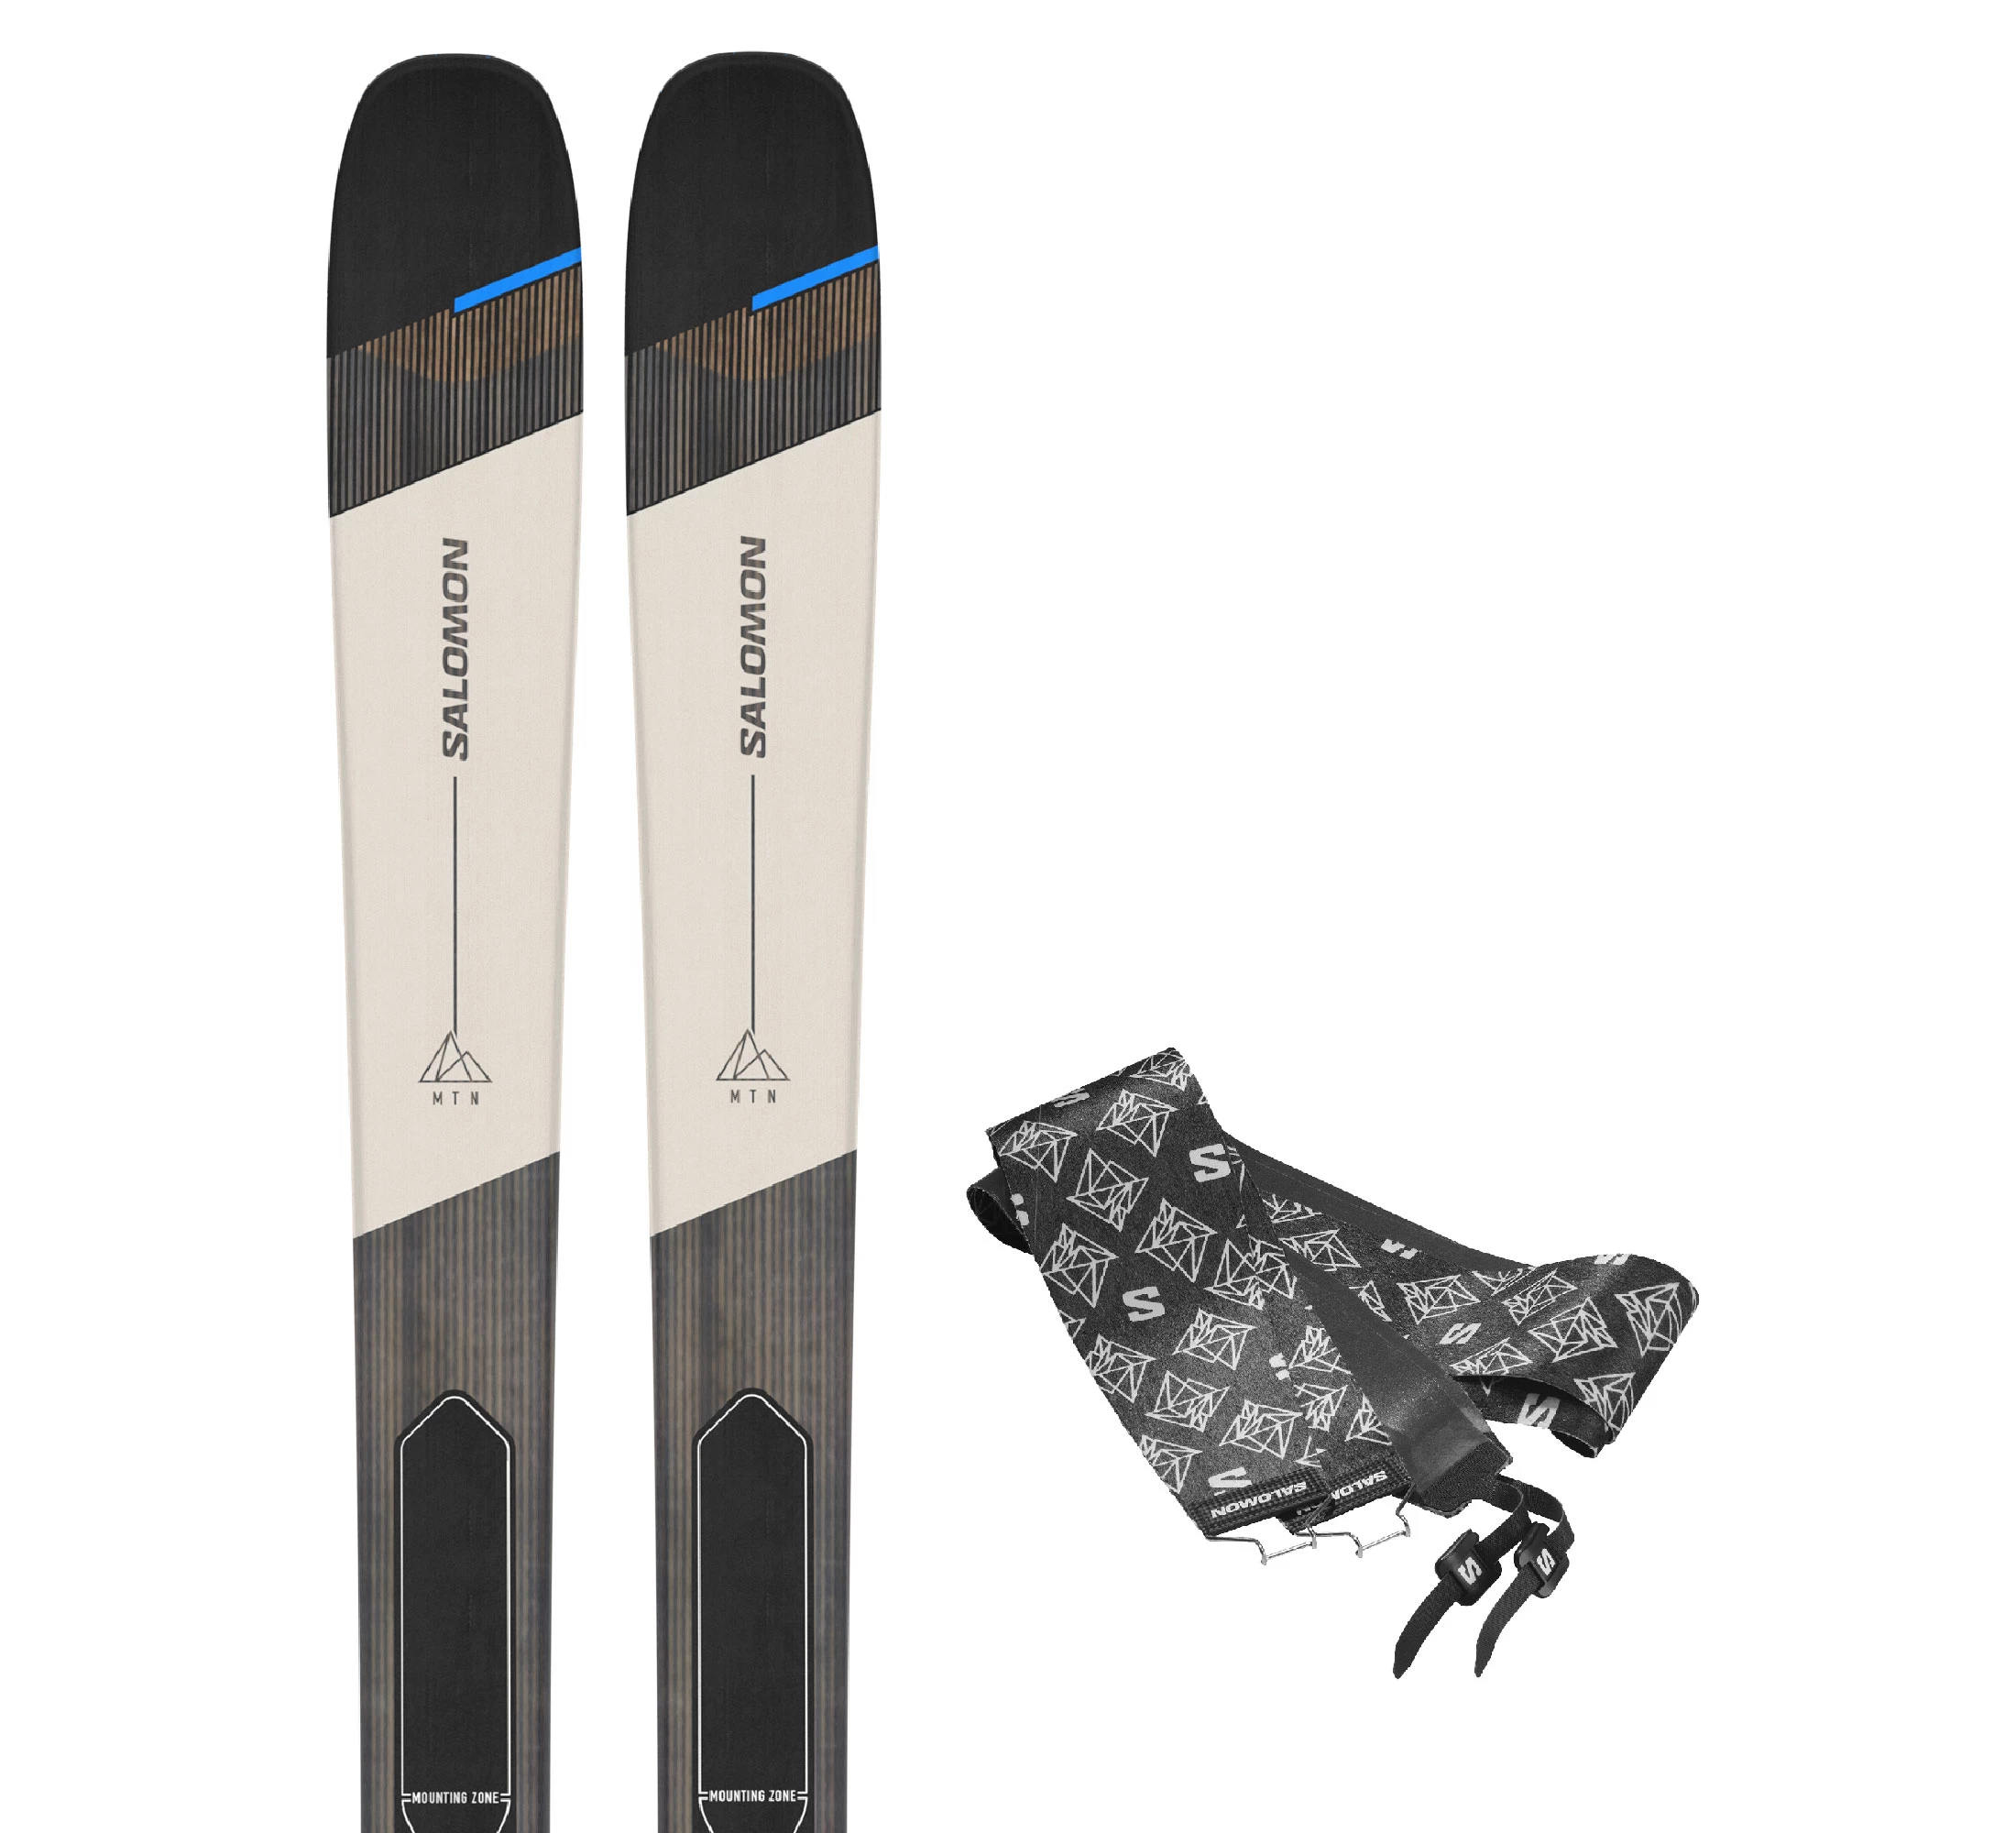 Turing skis Salomon MTN Carbon 96 + skins